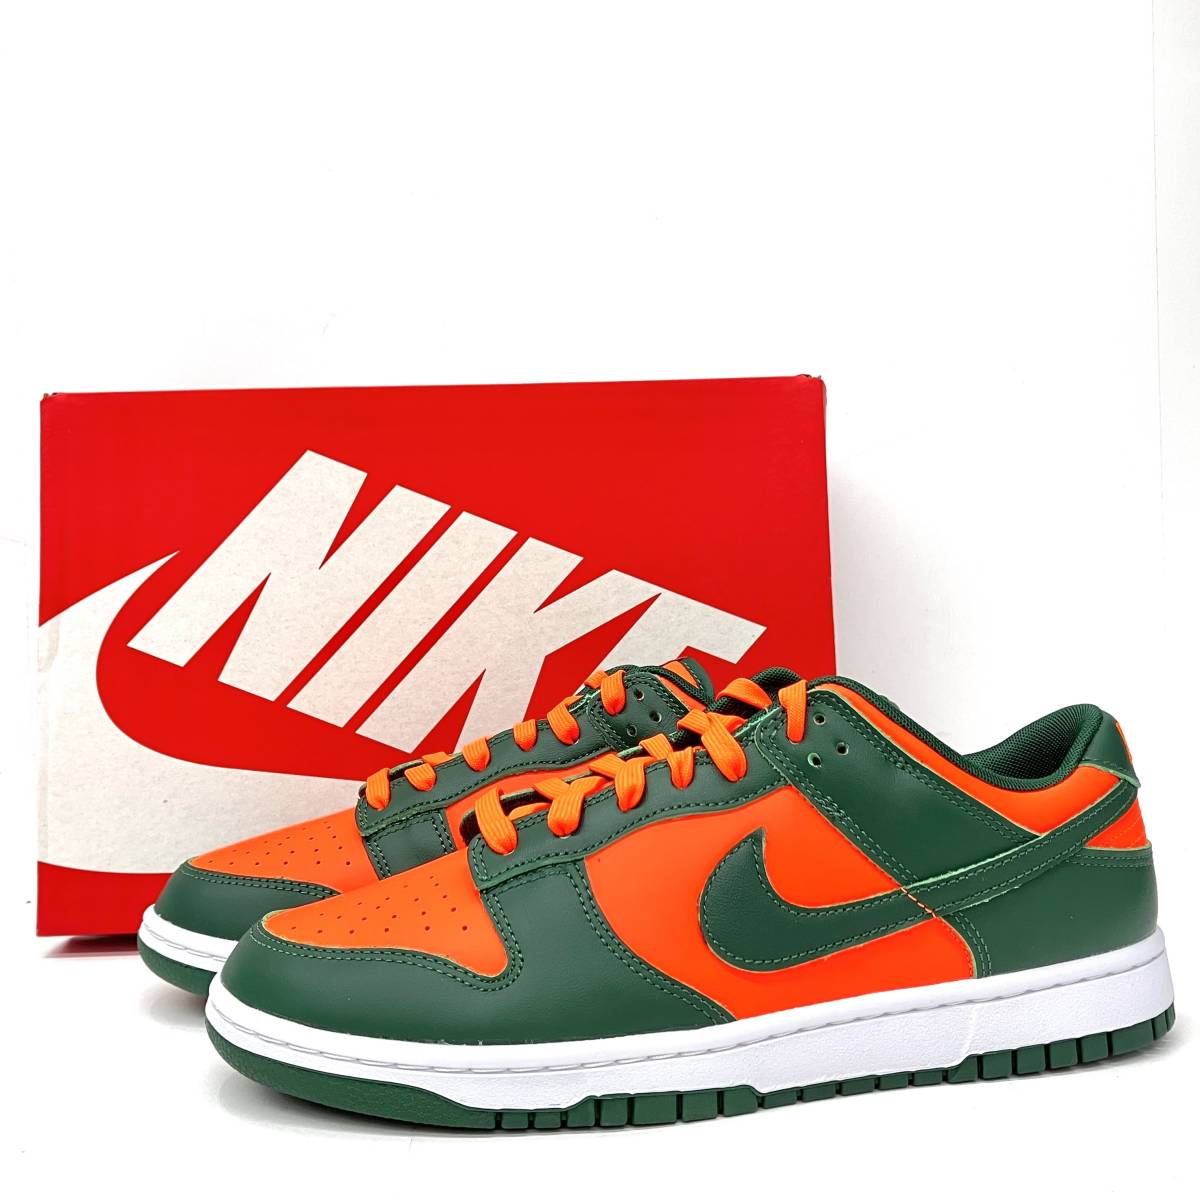 Nike Dunk Low Retro Gorge Green and Total Orange ナイキ ダンク ロー レトロ ゴージグリーン DD1391-300 サイズ28.5cm